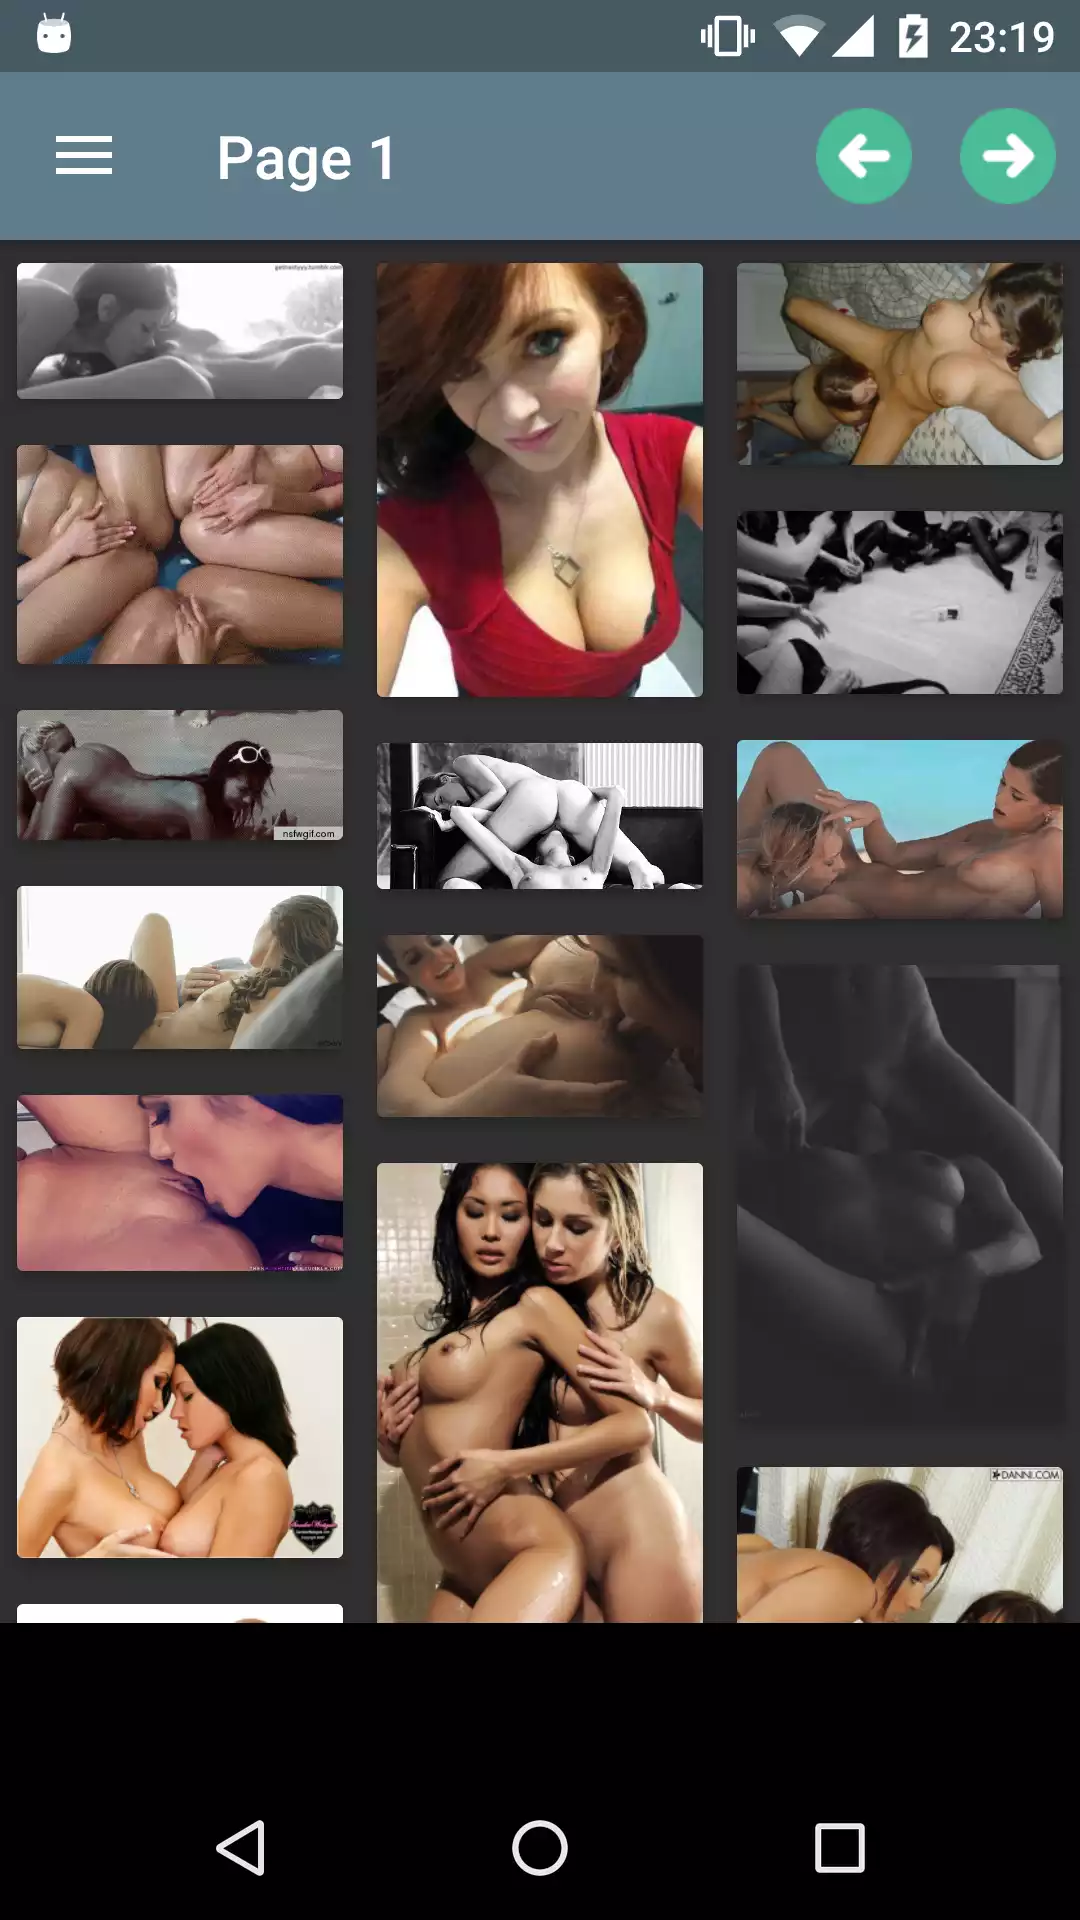 Lesbian Pornstars aplikasi,hentai,femboy,porn,henati,henta,app,wallpaper,cuckhold,images,galleries,best,for,sexy,apps,gallery,lesbian,pics,free,erotic,hot,pornstars,manga,photos,adult,pornstar